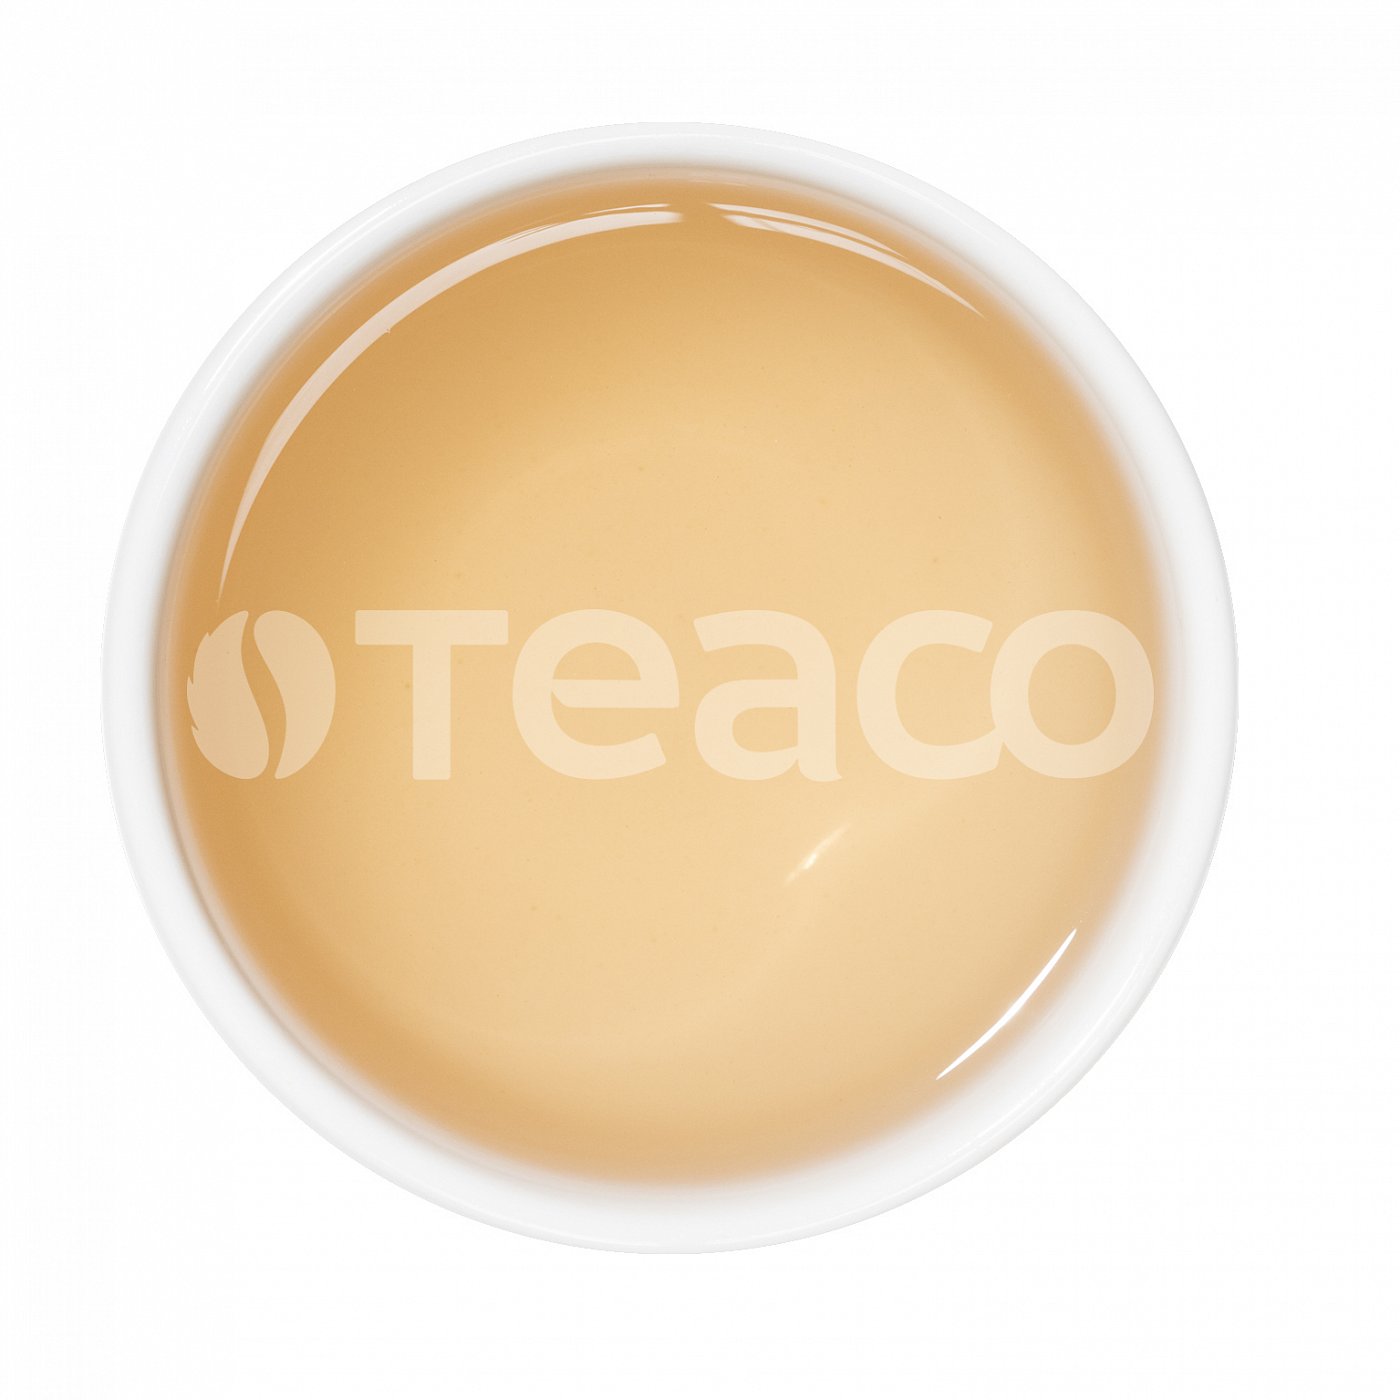 Чай зеленый TEACO Земляника со сливками, 200 гр.